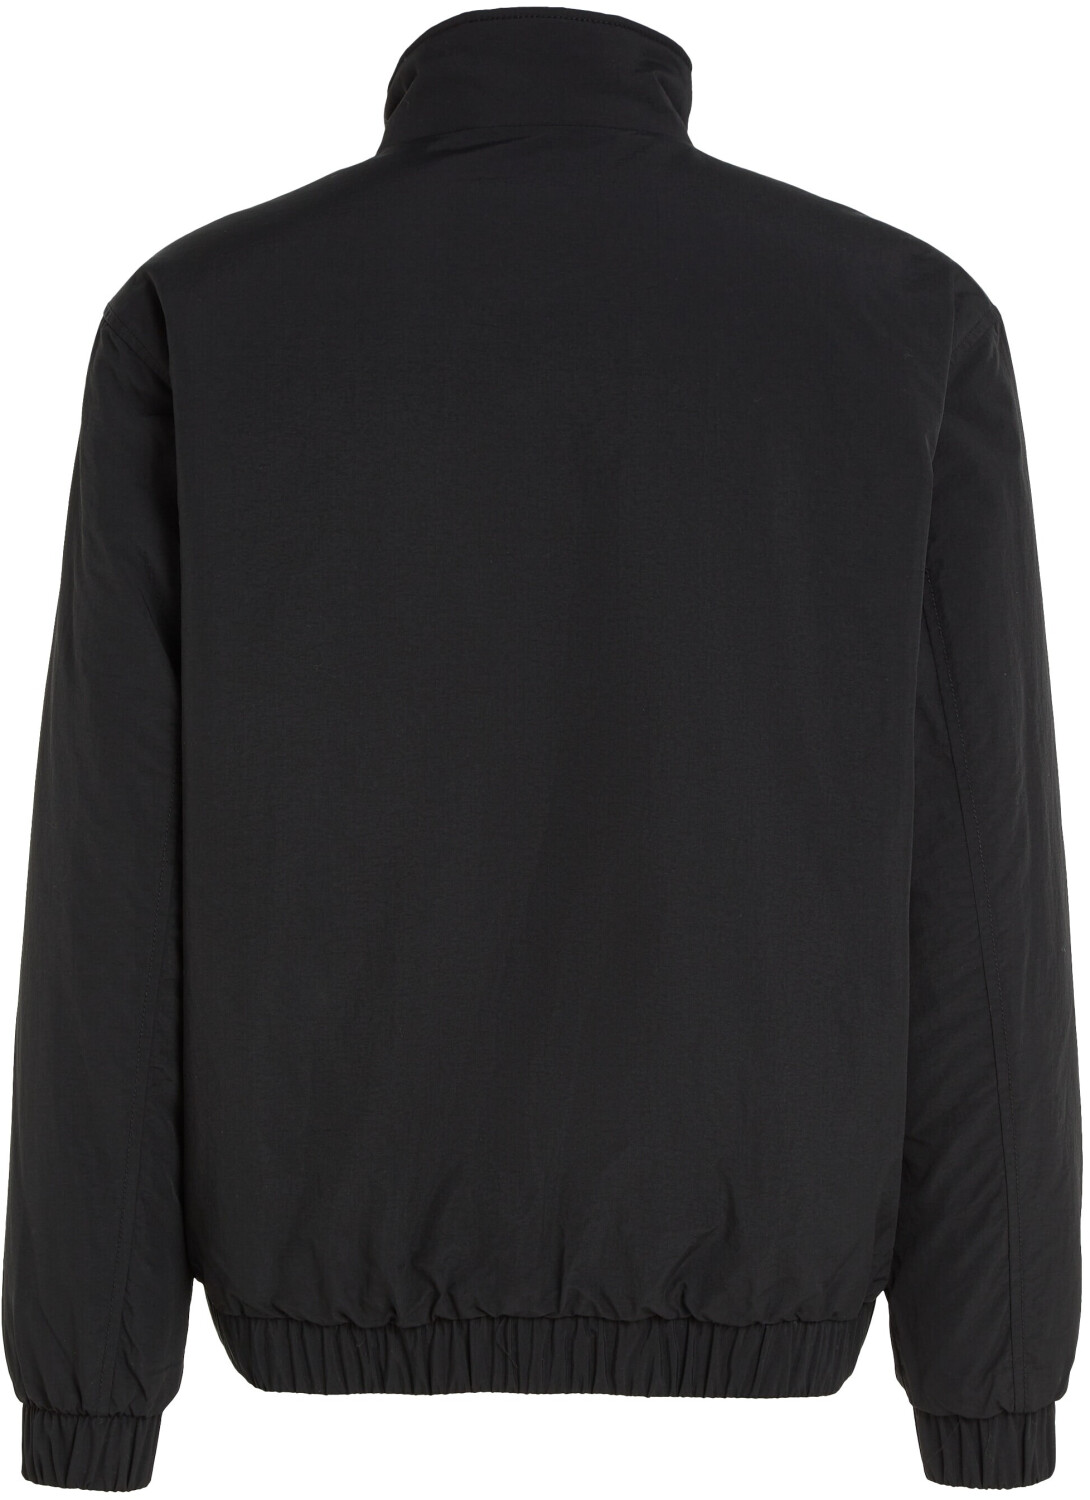 Padded Essential on (Today) Hilfiger TJM Jacket Buy black Tommy from – £86.99 Deals (DM0DM17238) Best